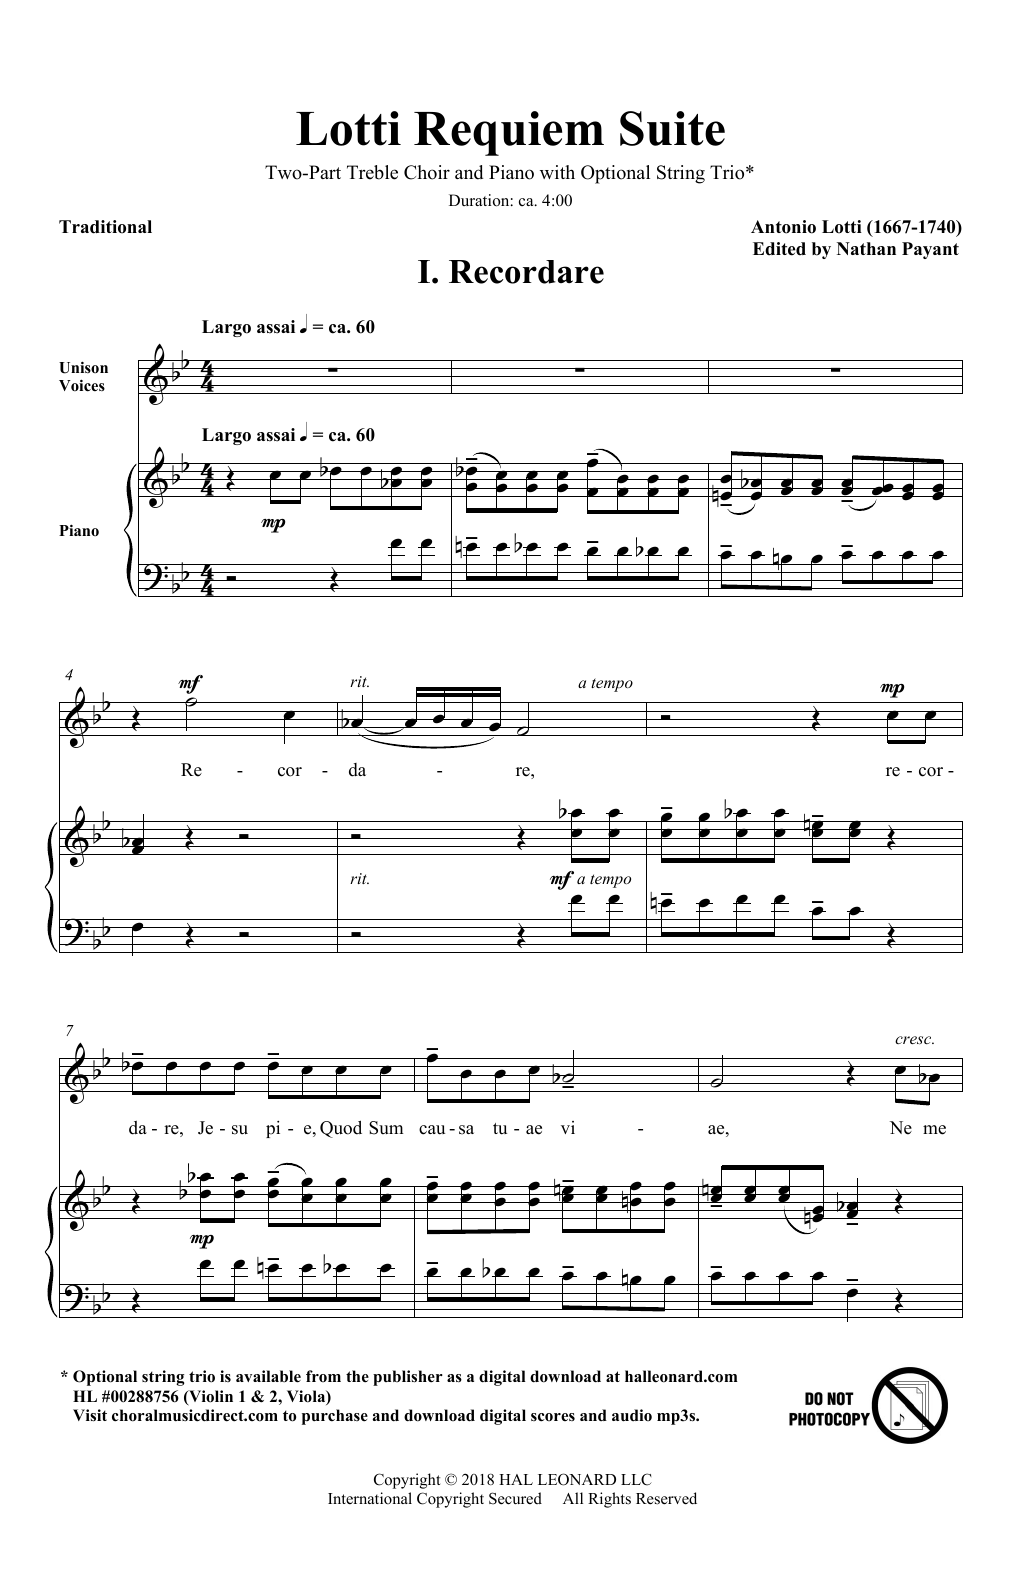 Antonio Lotti Lotti Requiem Suite (arr. Natahn Payant) sheet music notes and chords. Download Printable PDF.